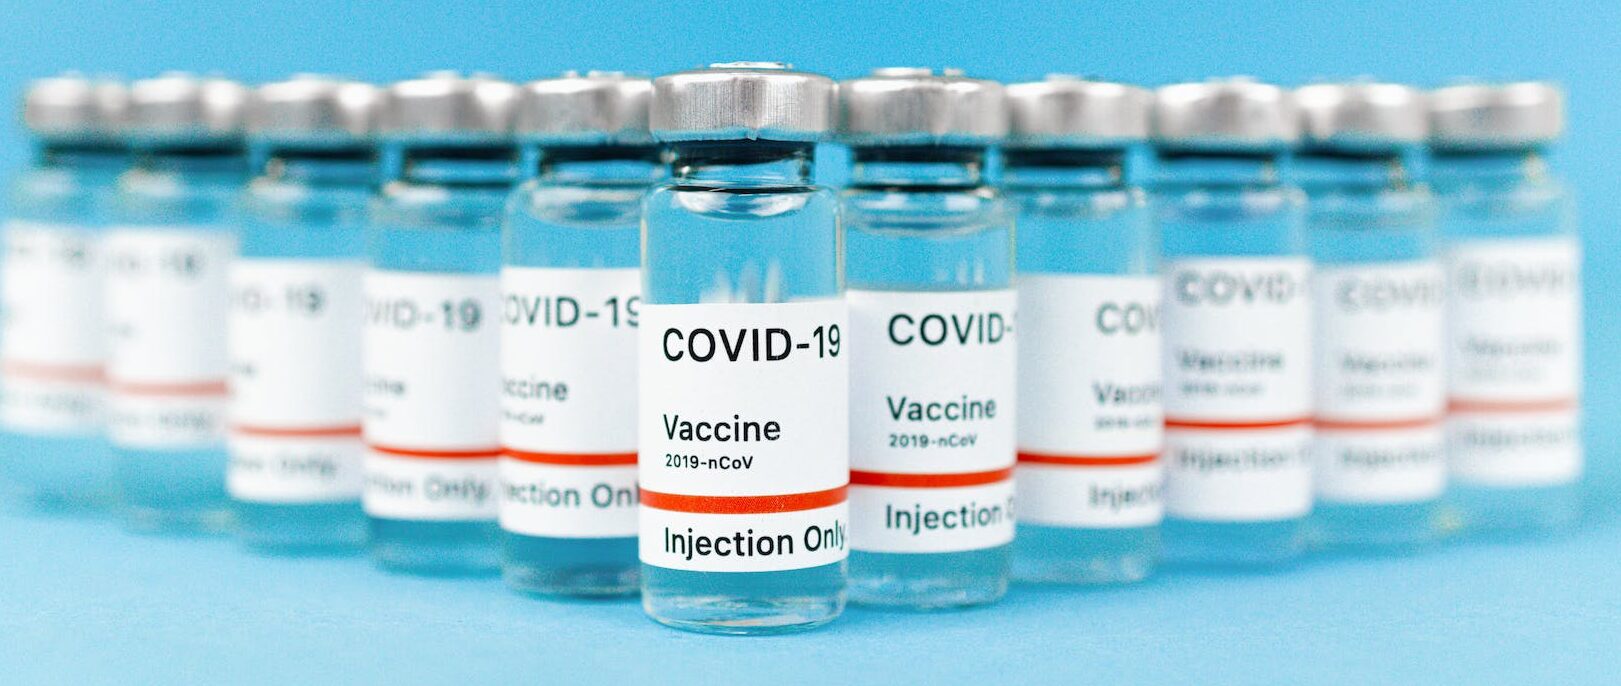 COVID-19 vaccine bottles on blue background (Photo by Maksim Goncharenok)